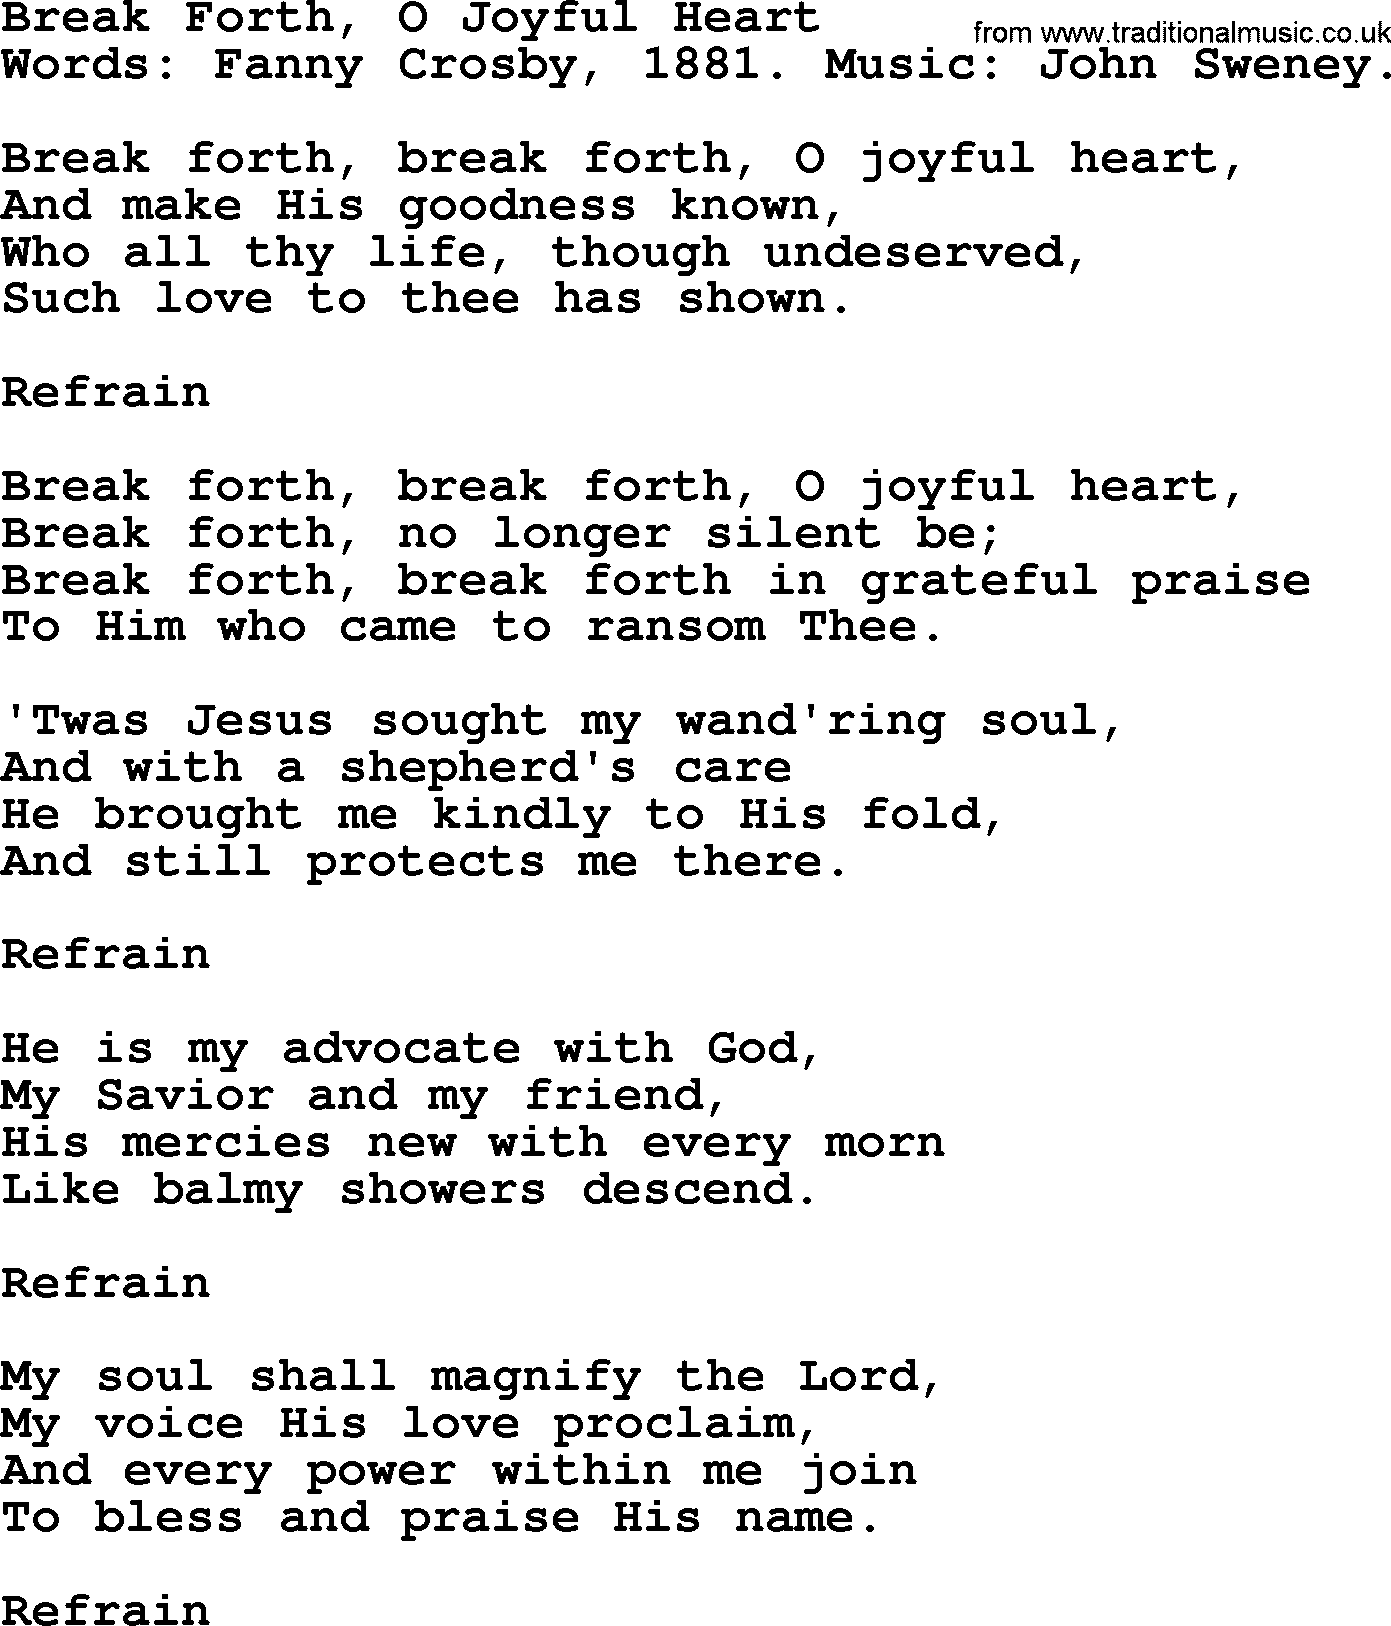 Fanny Crosby song: Break Forth, O Joyful Heart, lyrics